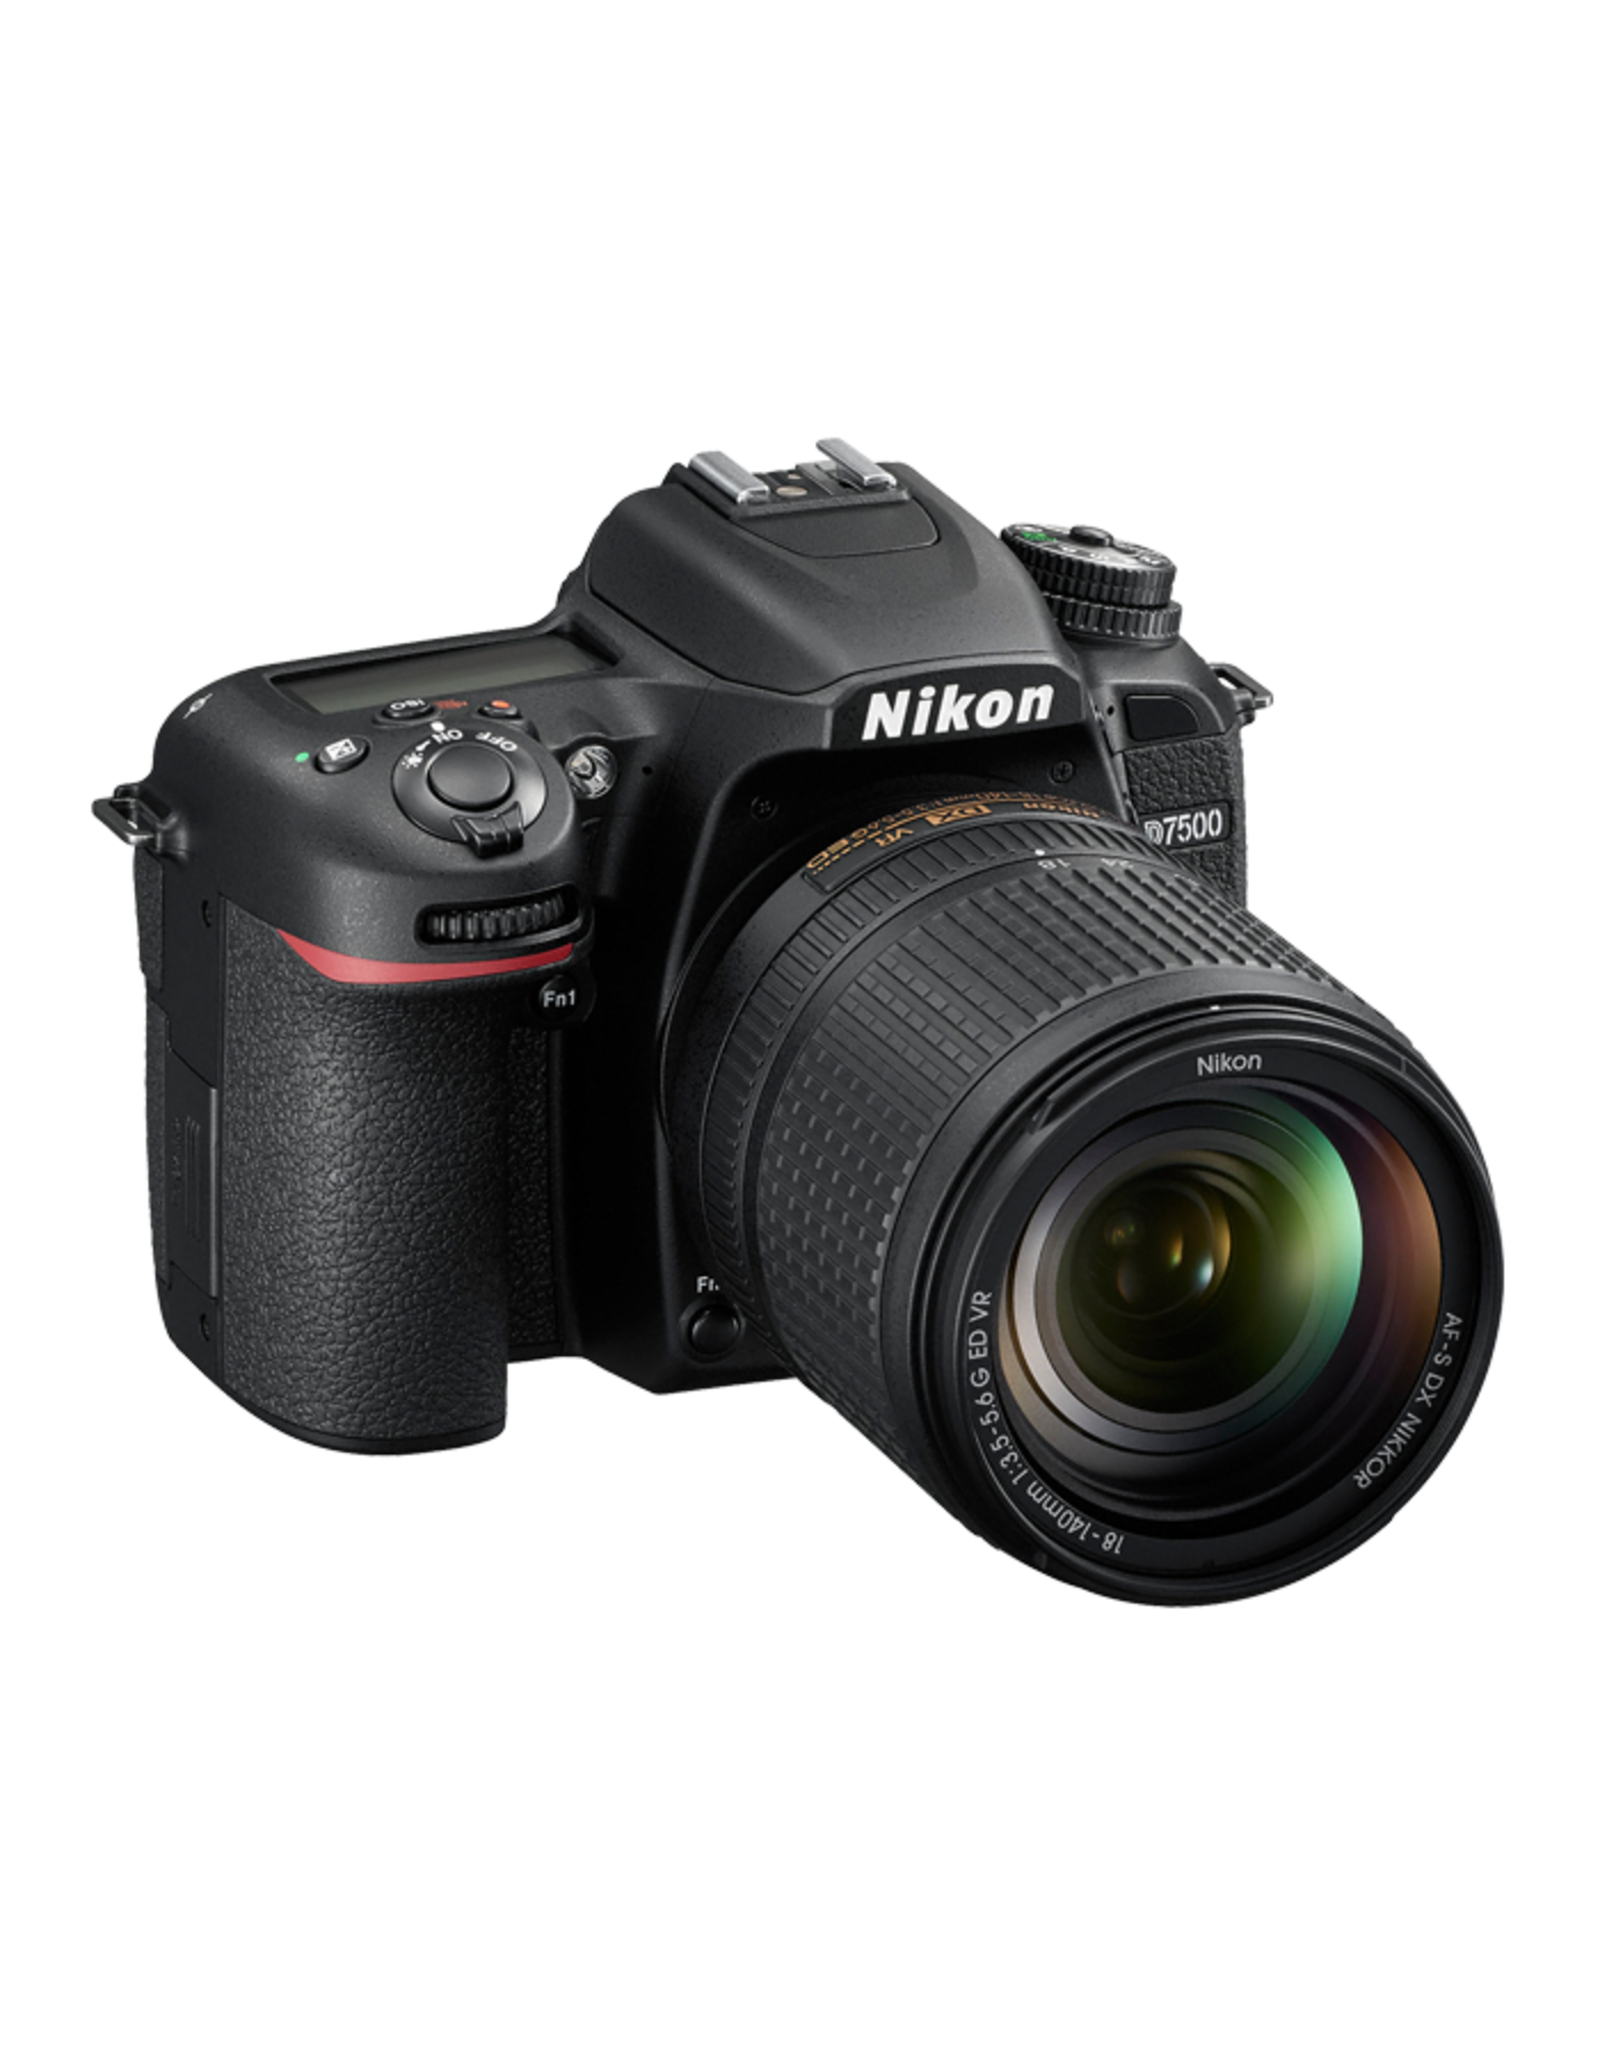 Nikon Nikon D7500 DSLR with 18-300mm Lens